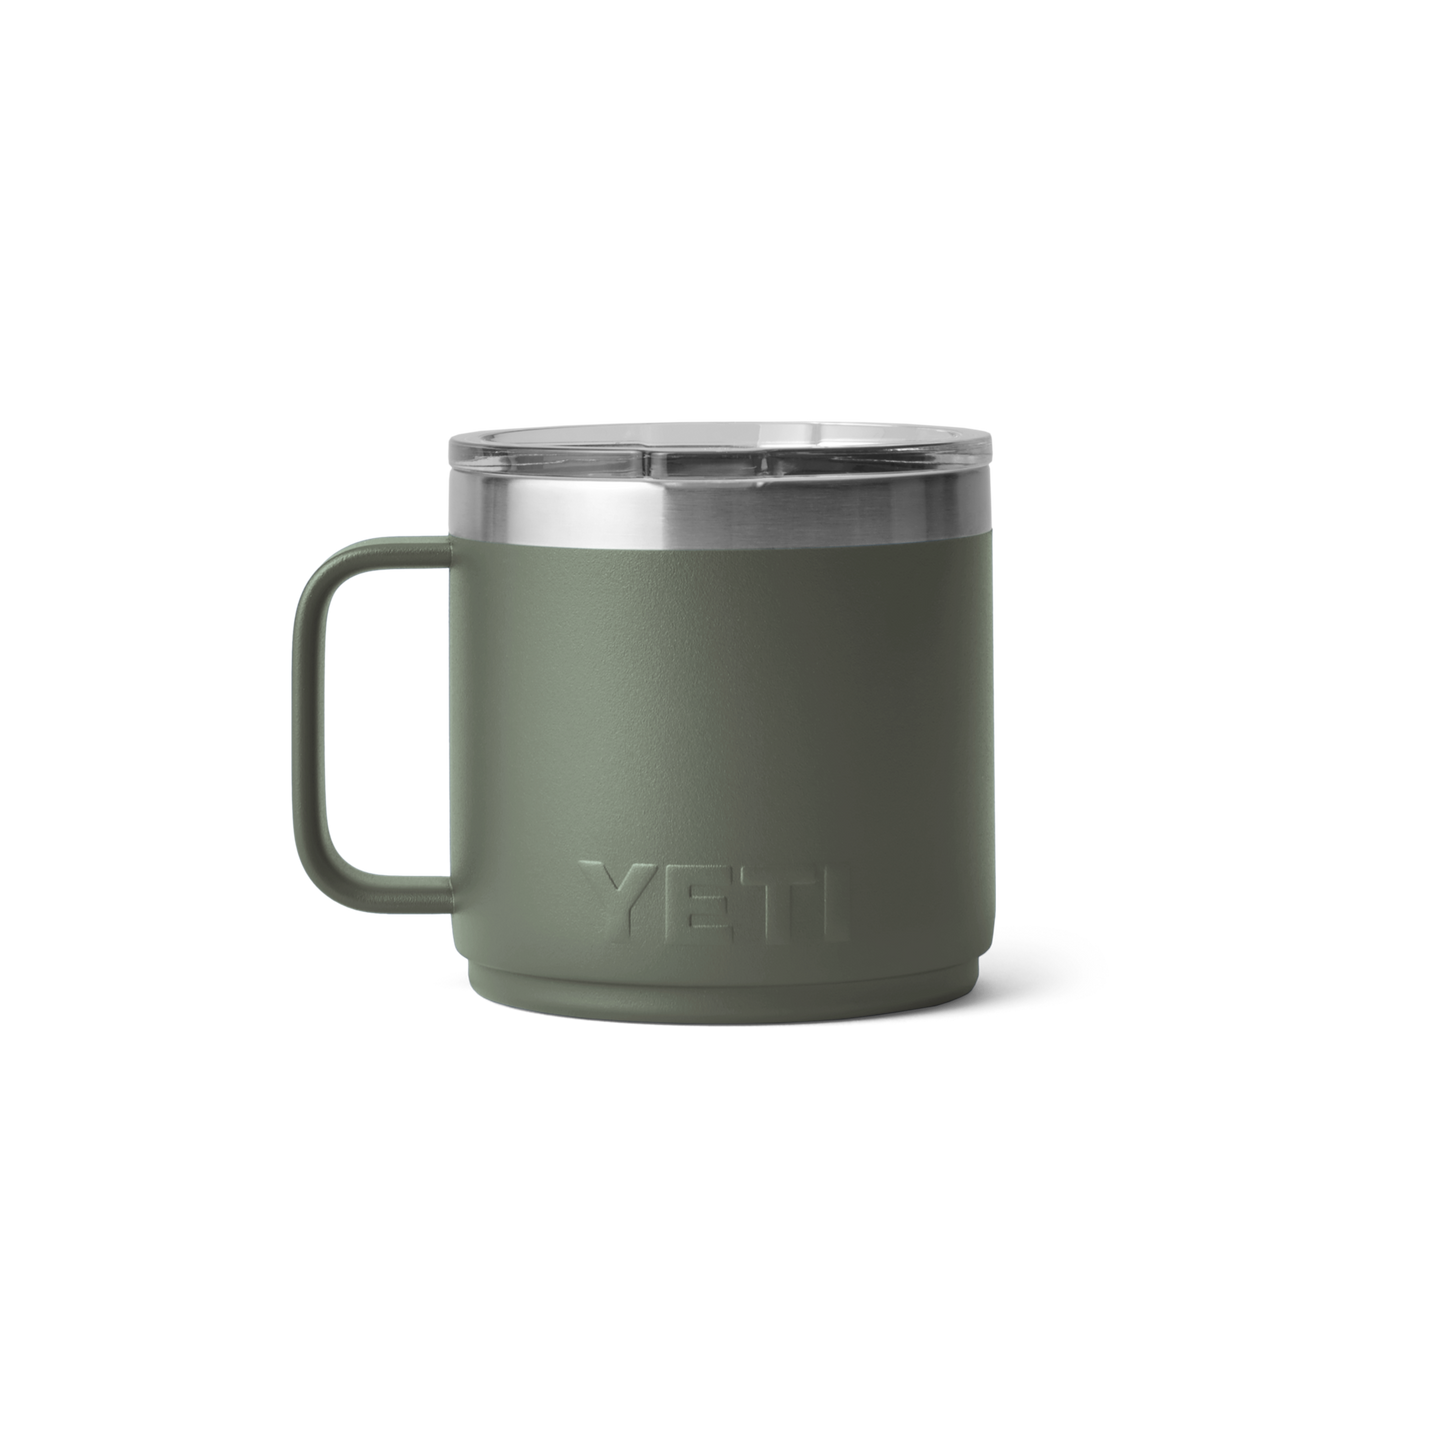 YETI Rambler 14 Oz Mug in Camp Green